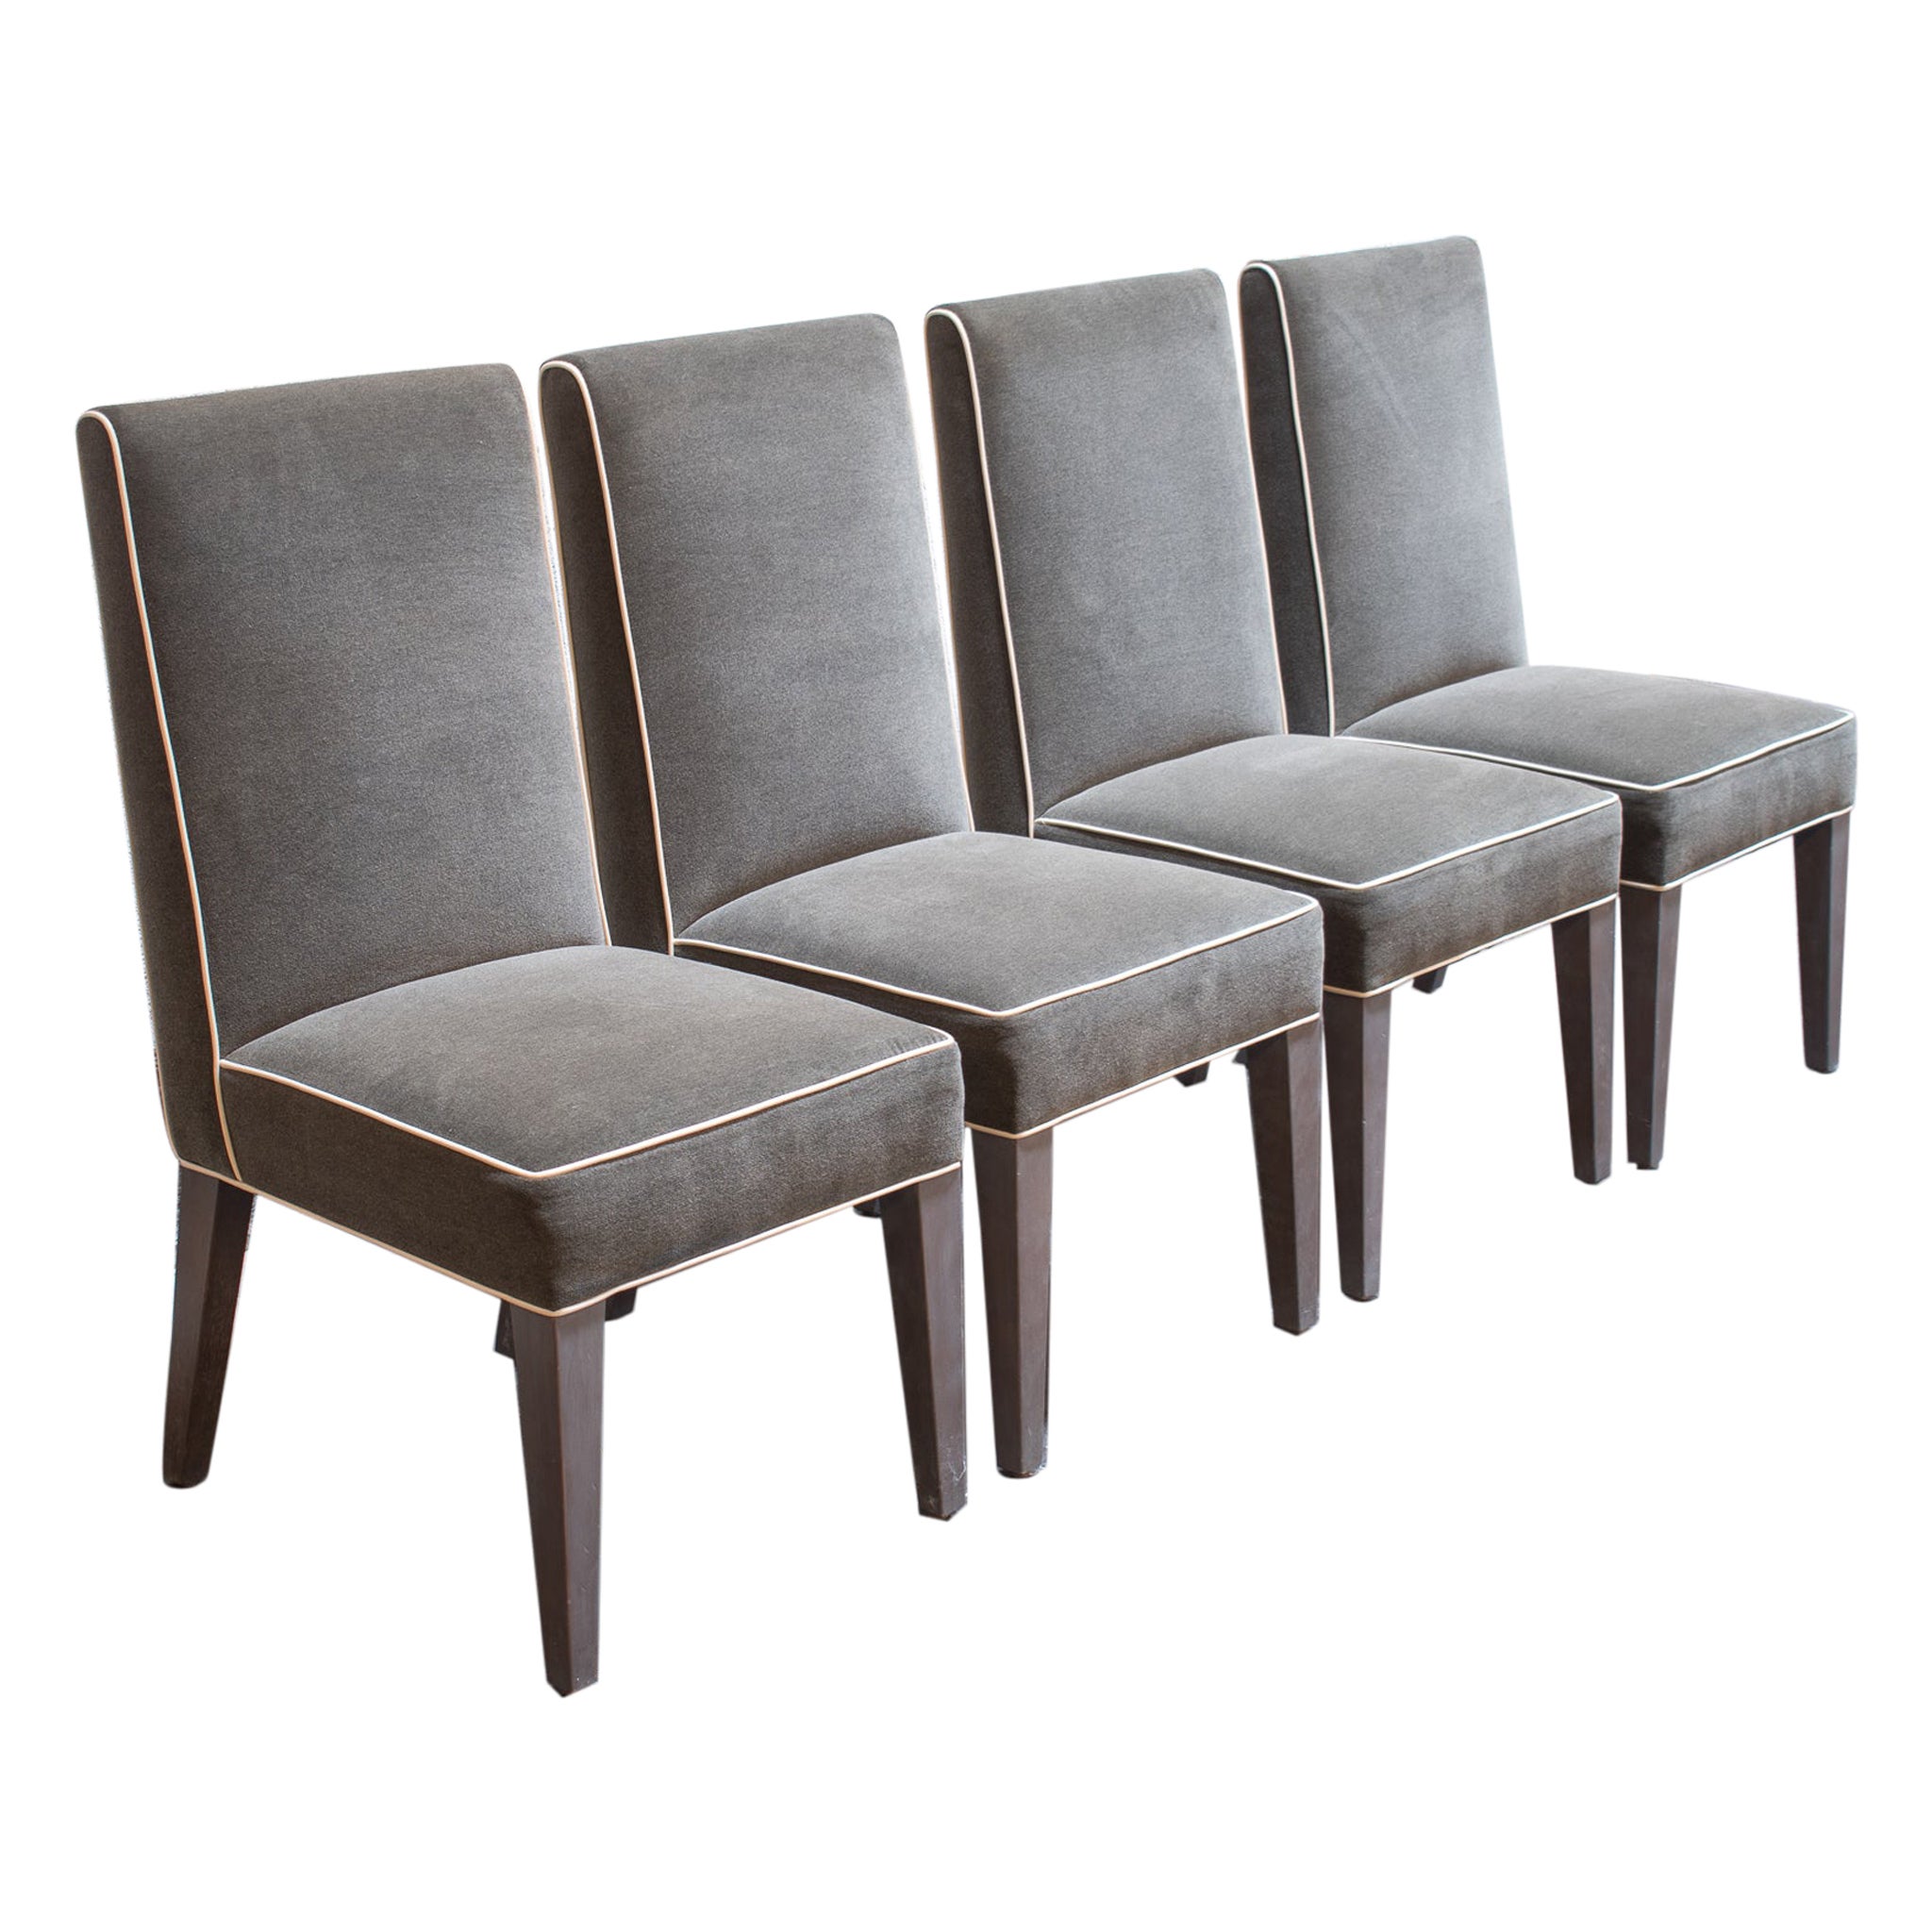 Gray Melange Upholstered Nils Dining Chairs, Showroom Samples, Set of 4 For Sale